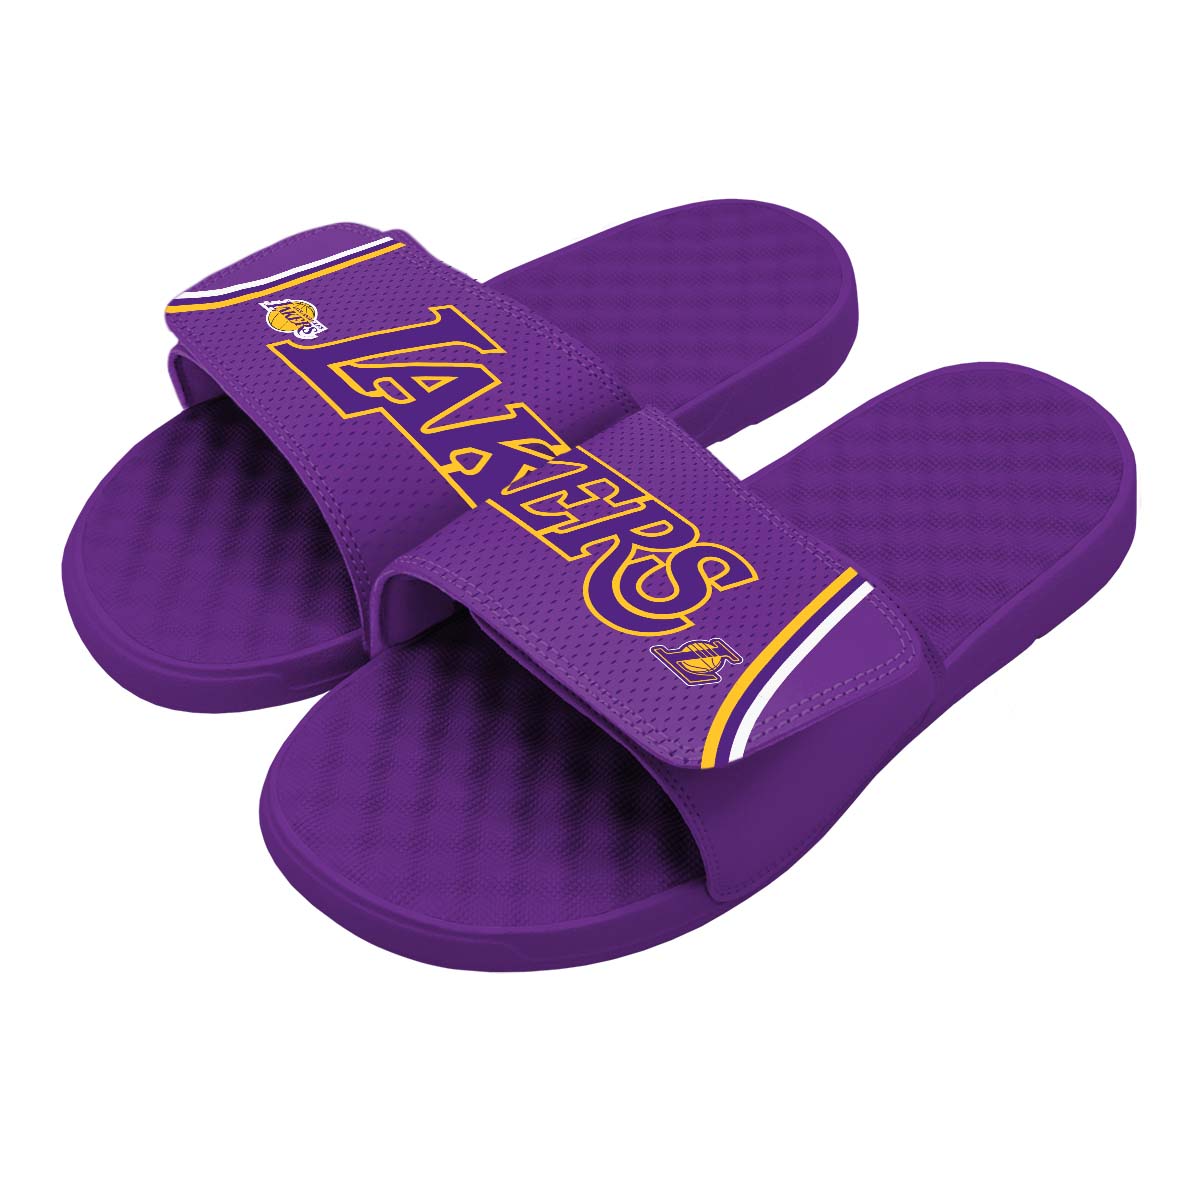 LA Lakers Purple Jersey Slides